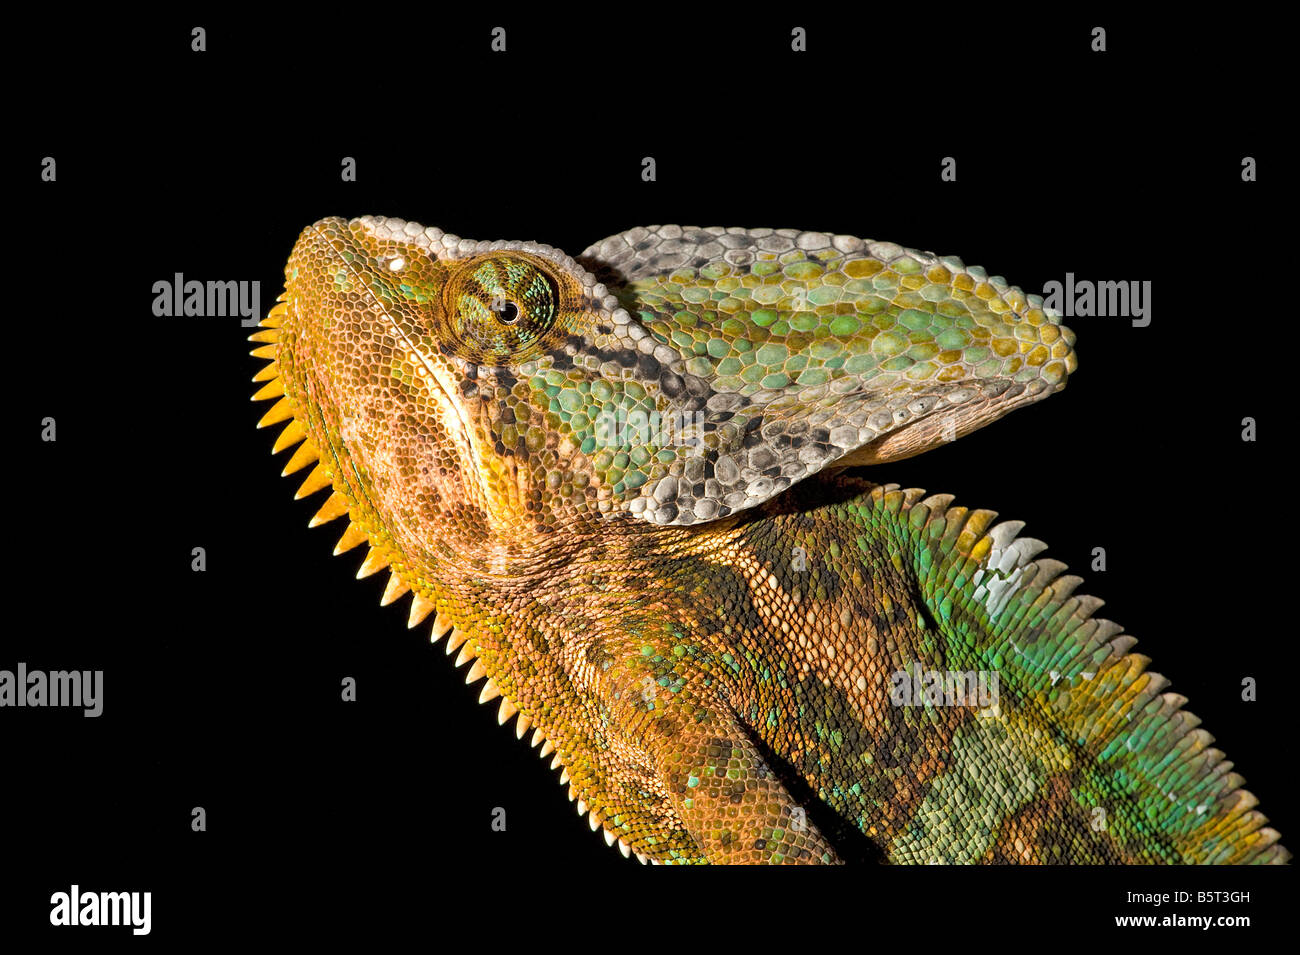 Male veiled or Yemen chameleon Chamaeleo calyptratus has a large casque on head Stock Photo